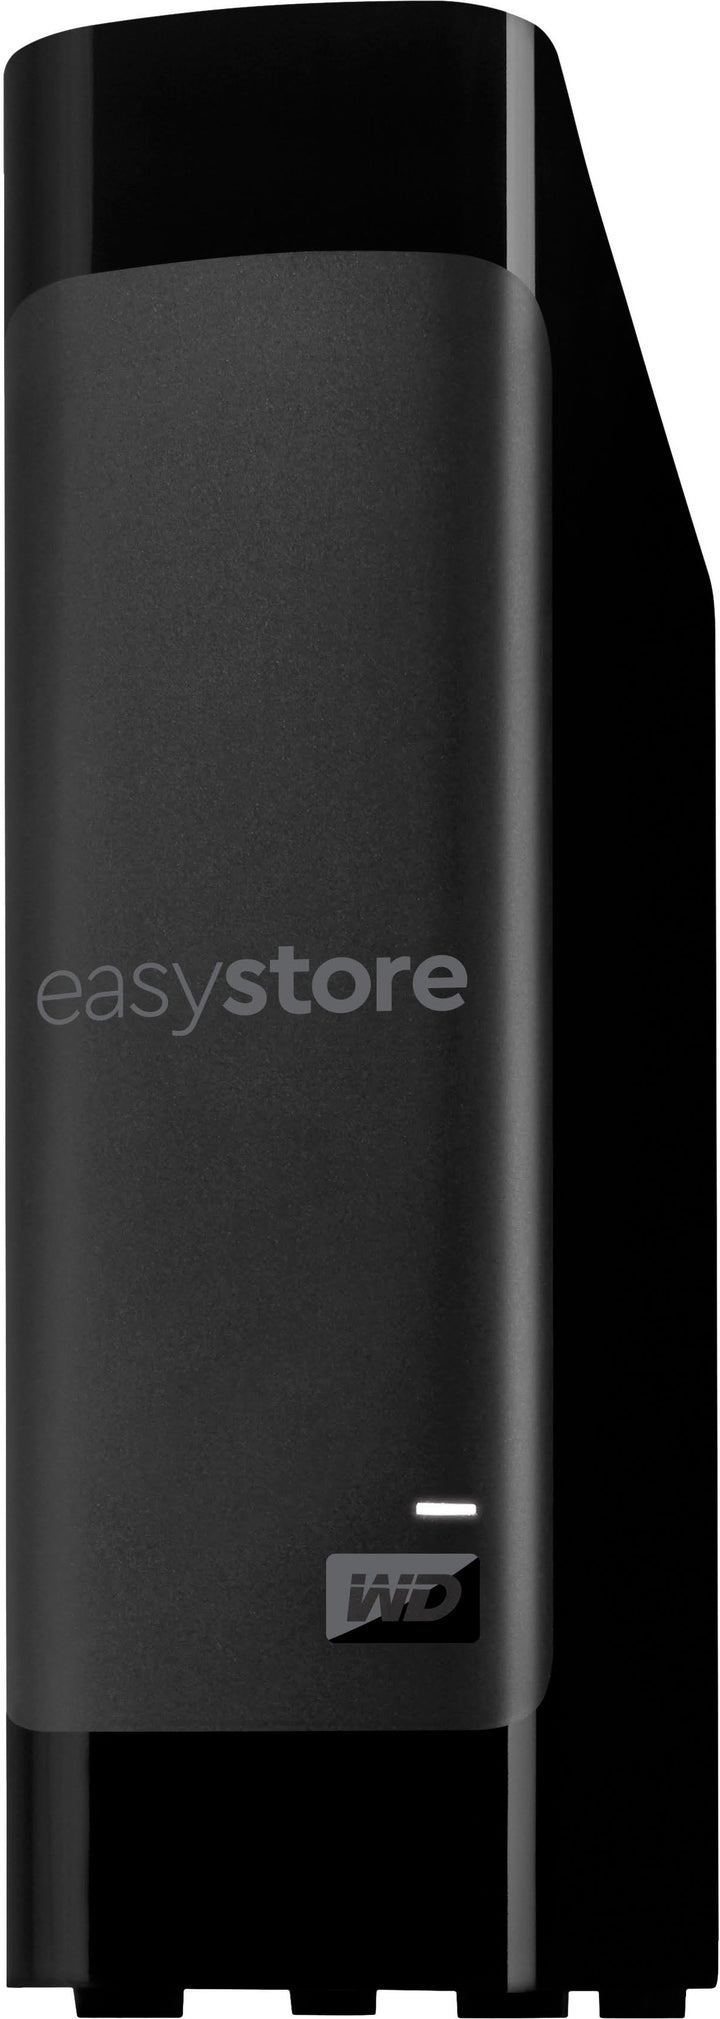 WD - easystore 20TB External USB 3.0 Hard Drive - Black_4